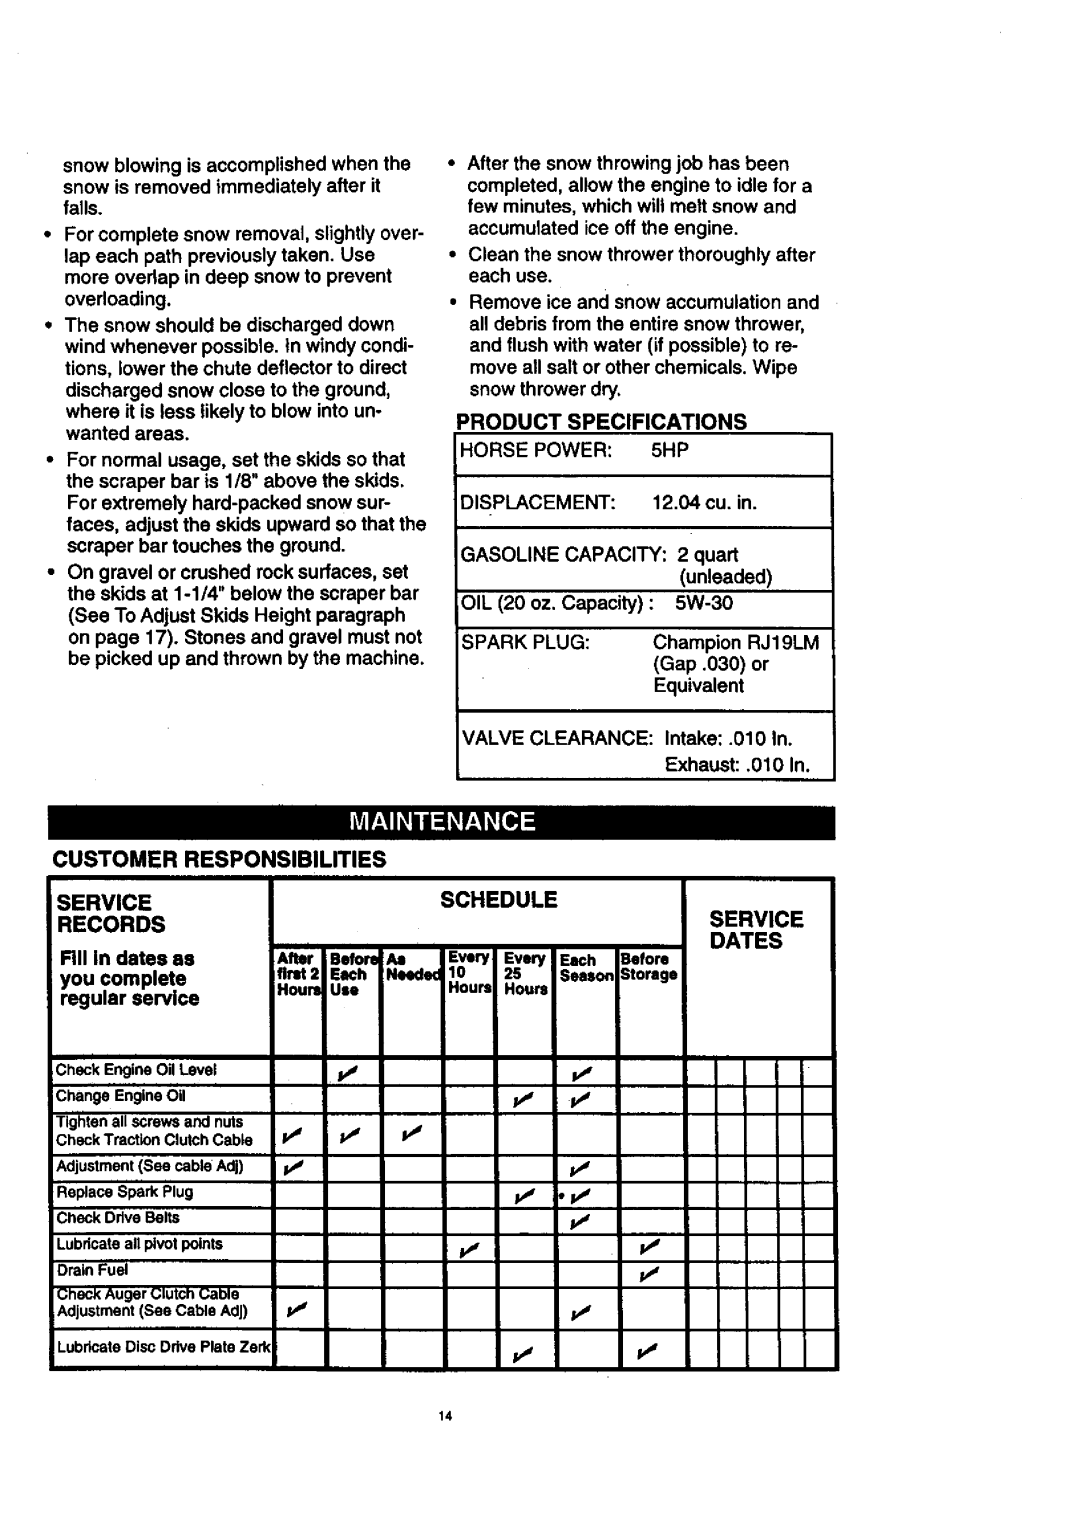 Craftsman 536.88614 manual Customer, Responsibilities, Service, Schedule, Records, Dates 